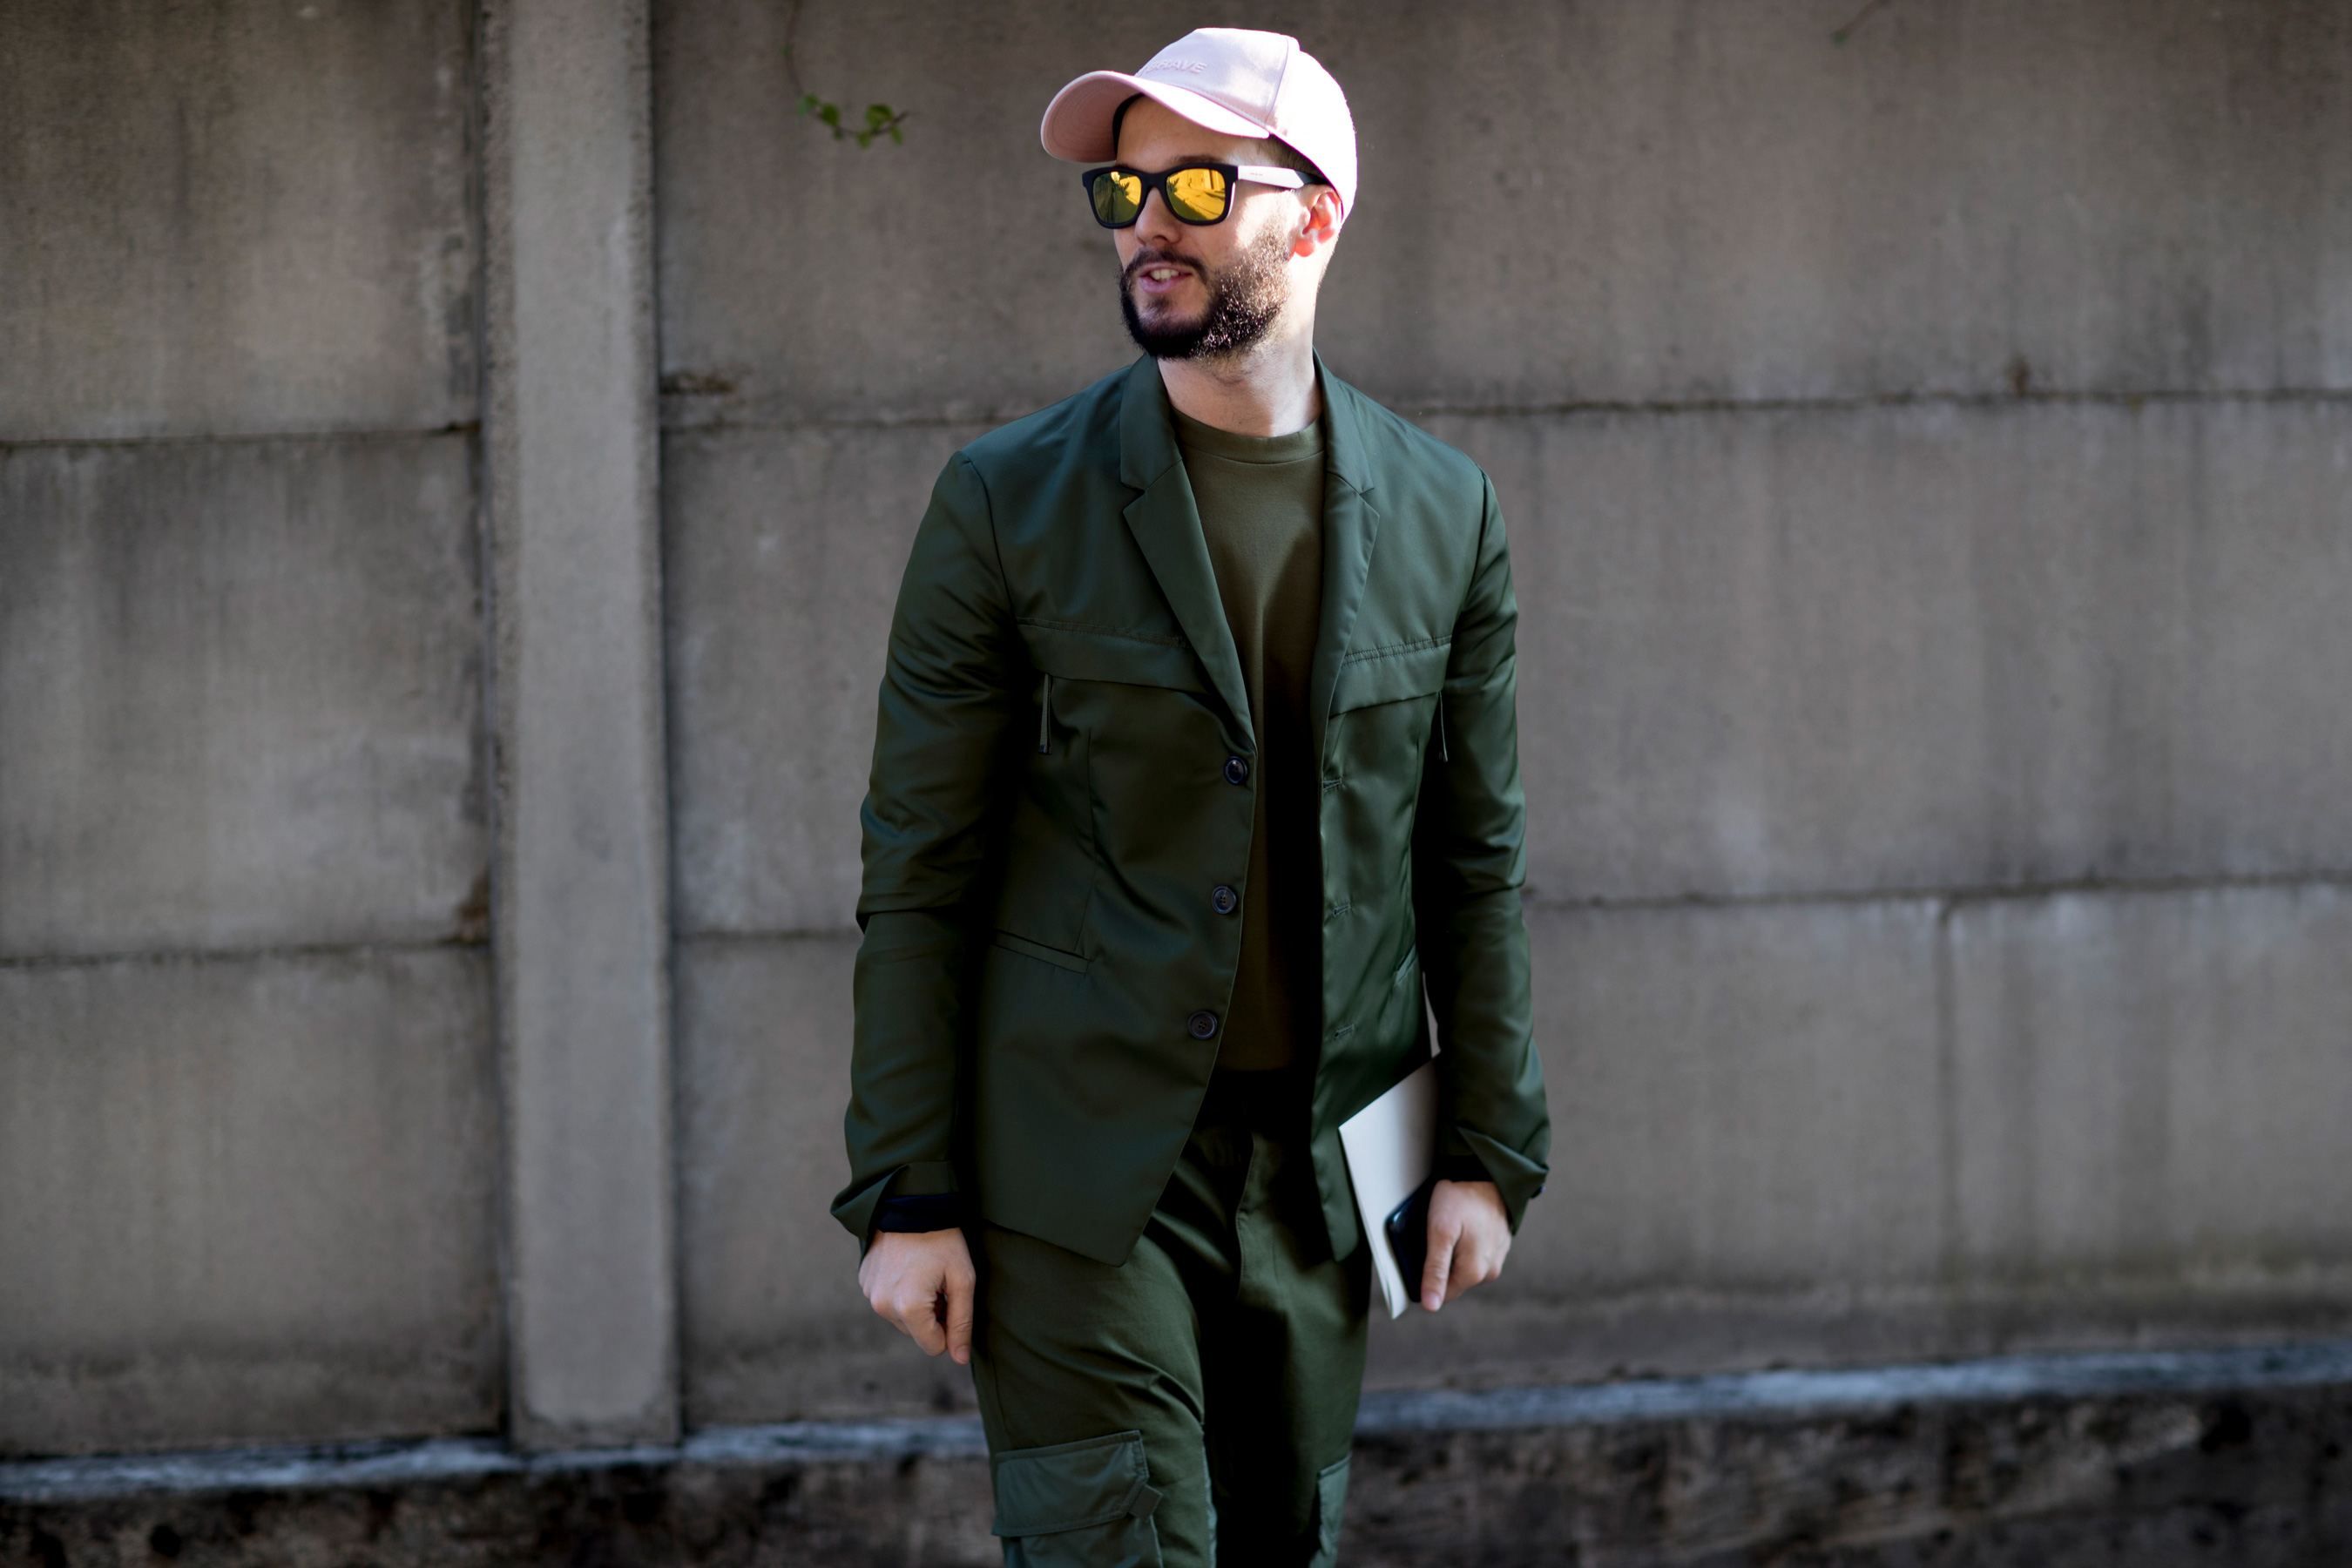 Milan Fashion Week Men's Street Style Fall 2018 Day 1 - The Impression